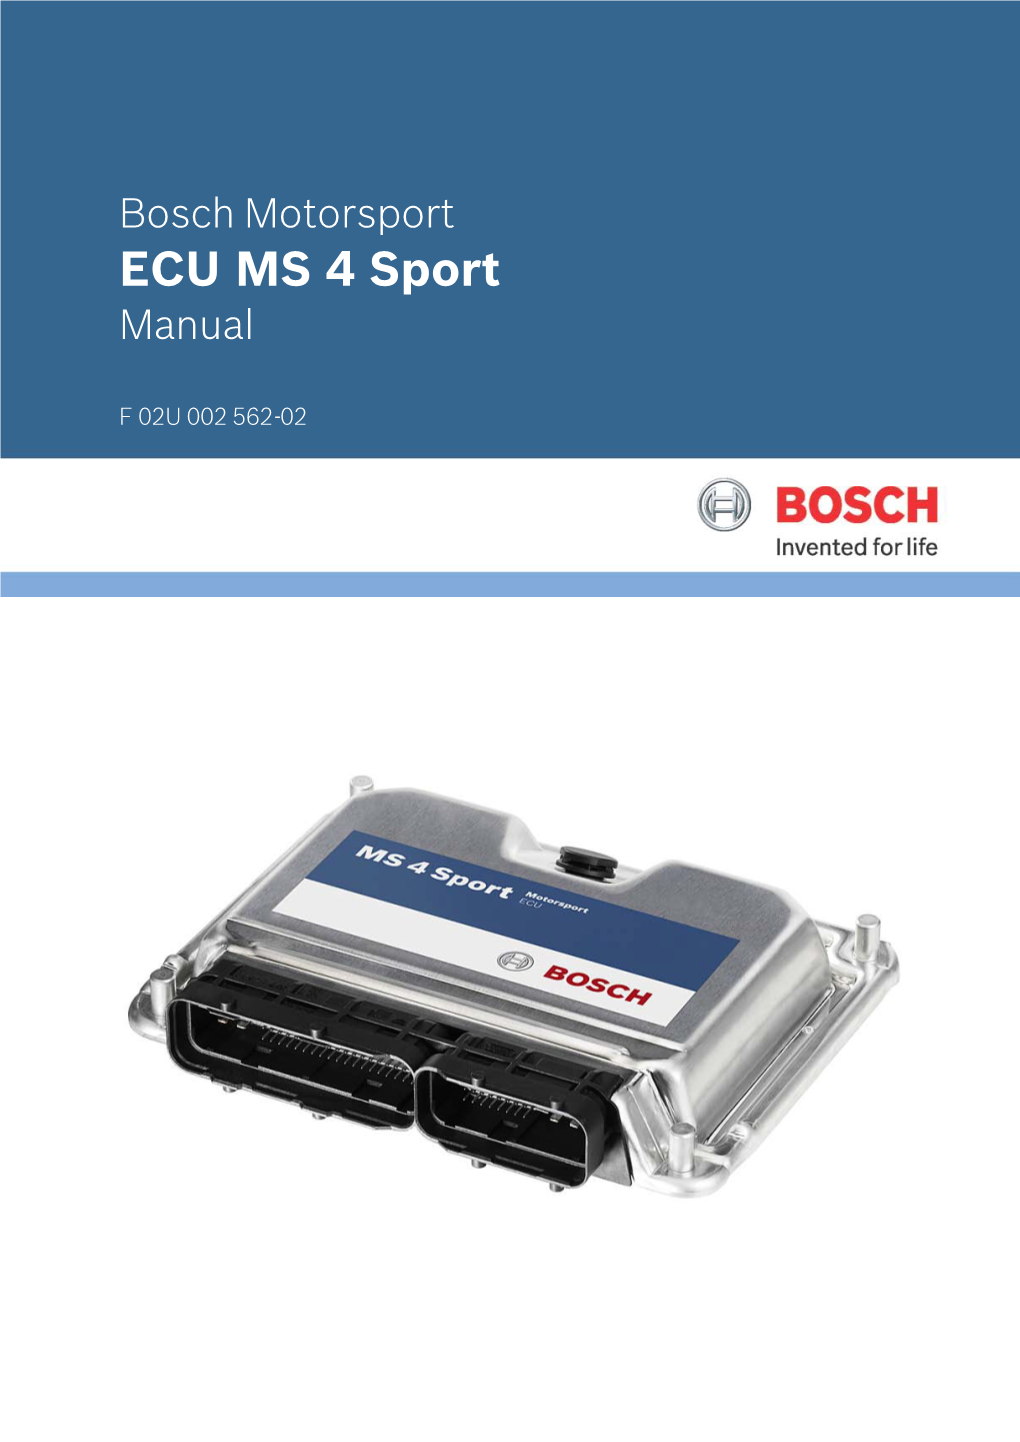 ECU MS 4 Sport Manual